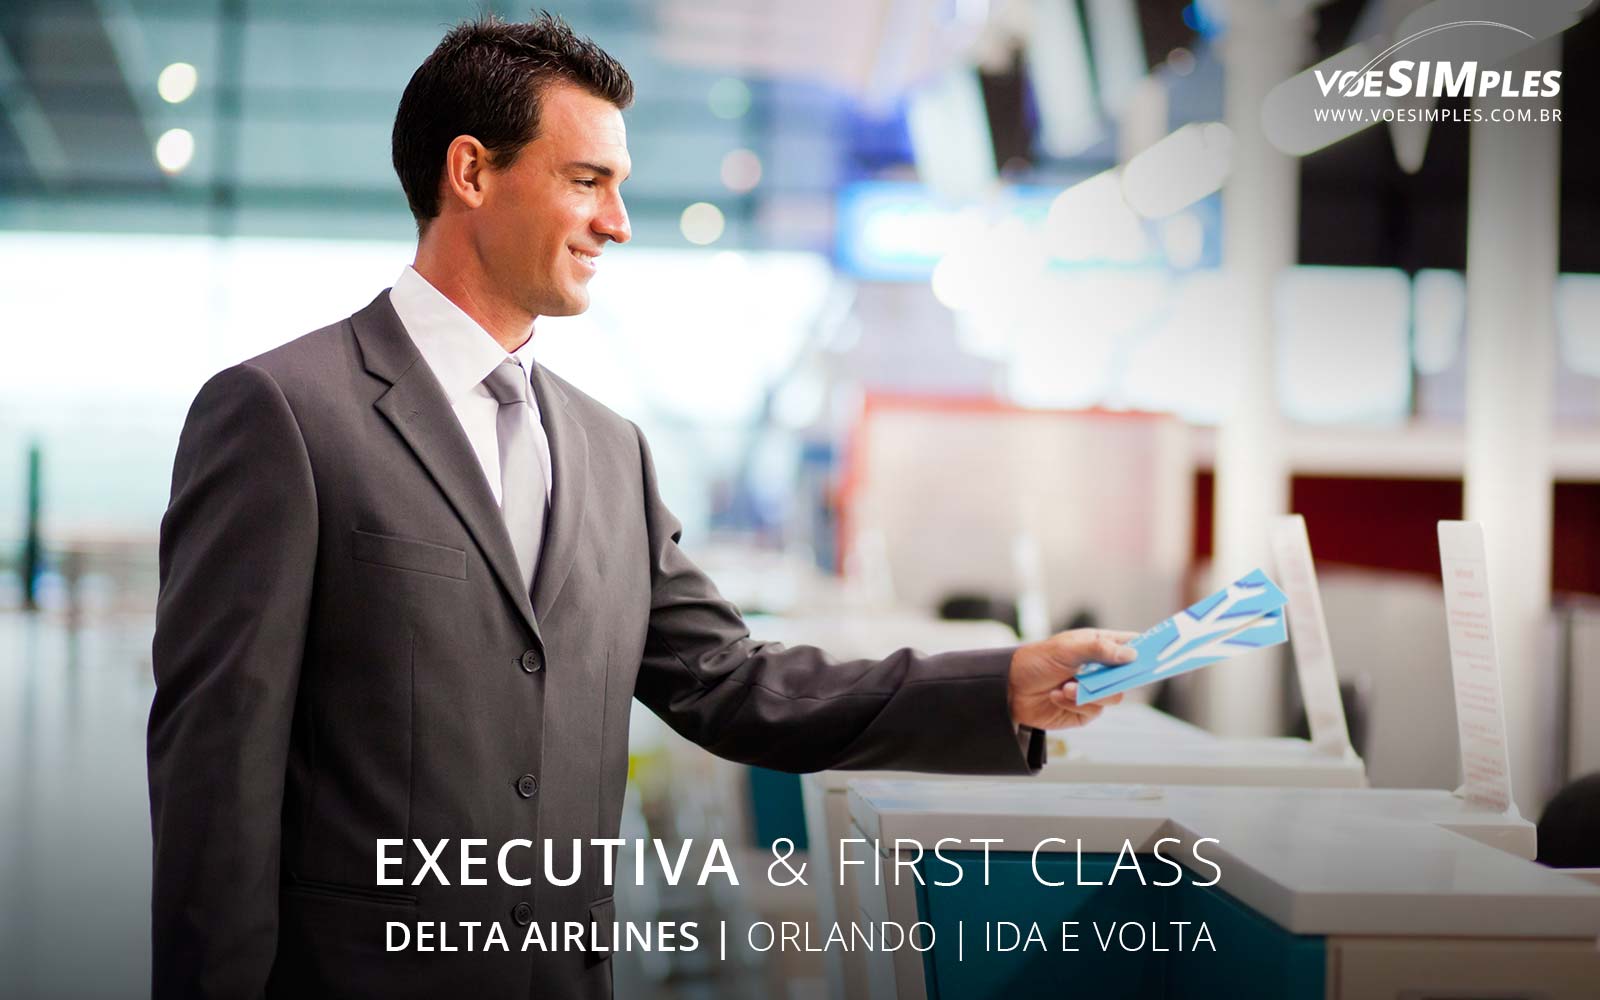 Passagem aérea executiva Delta Airlines para Orlando